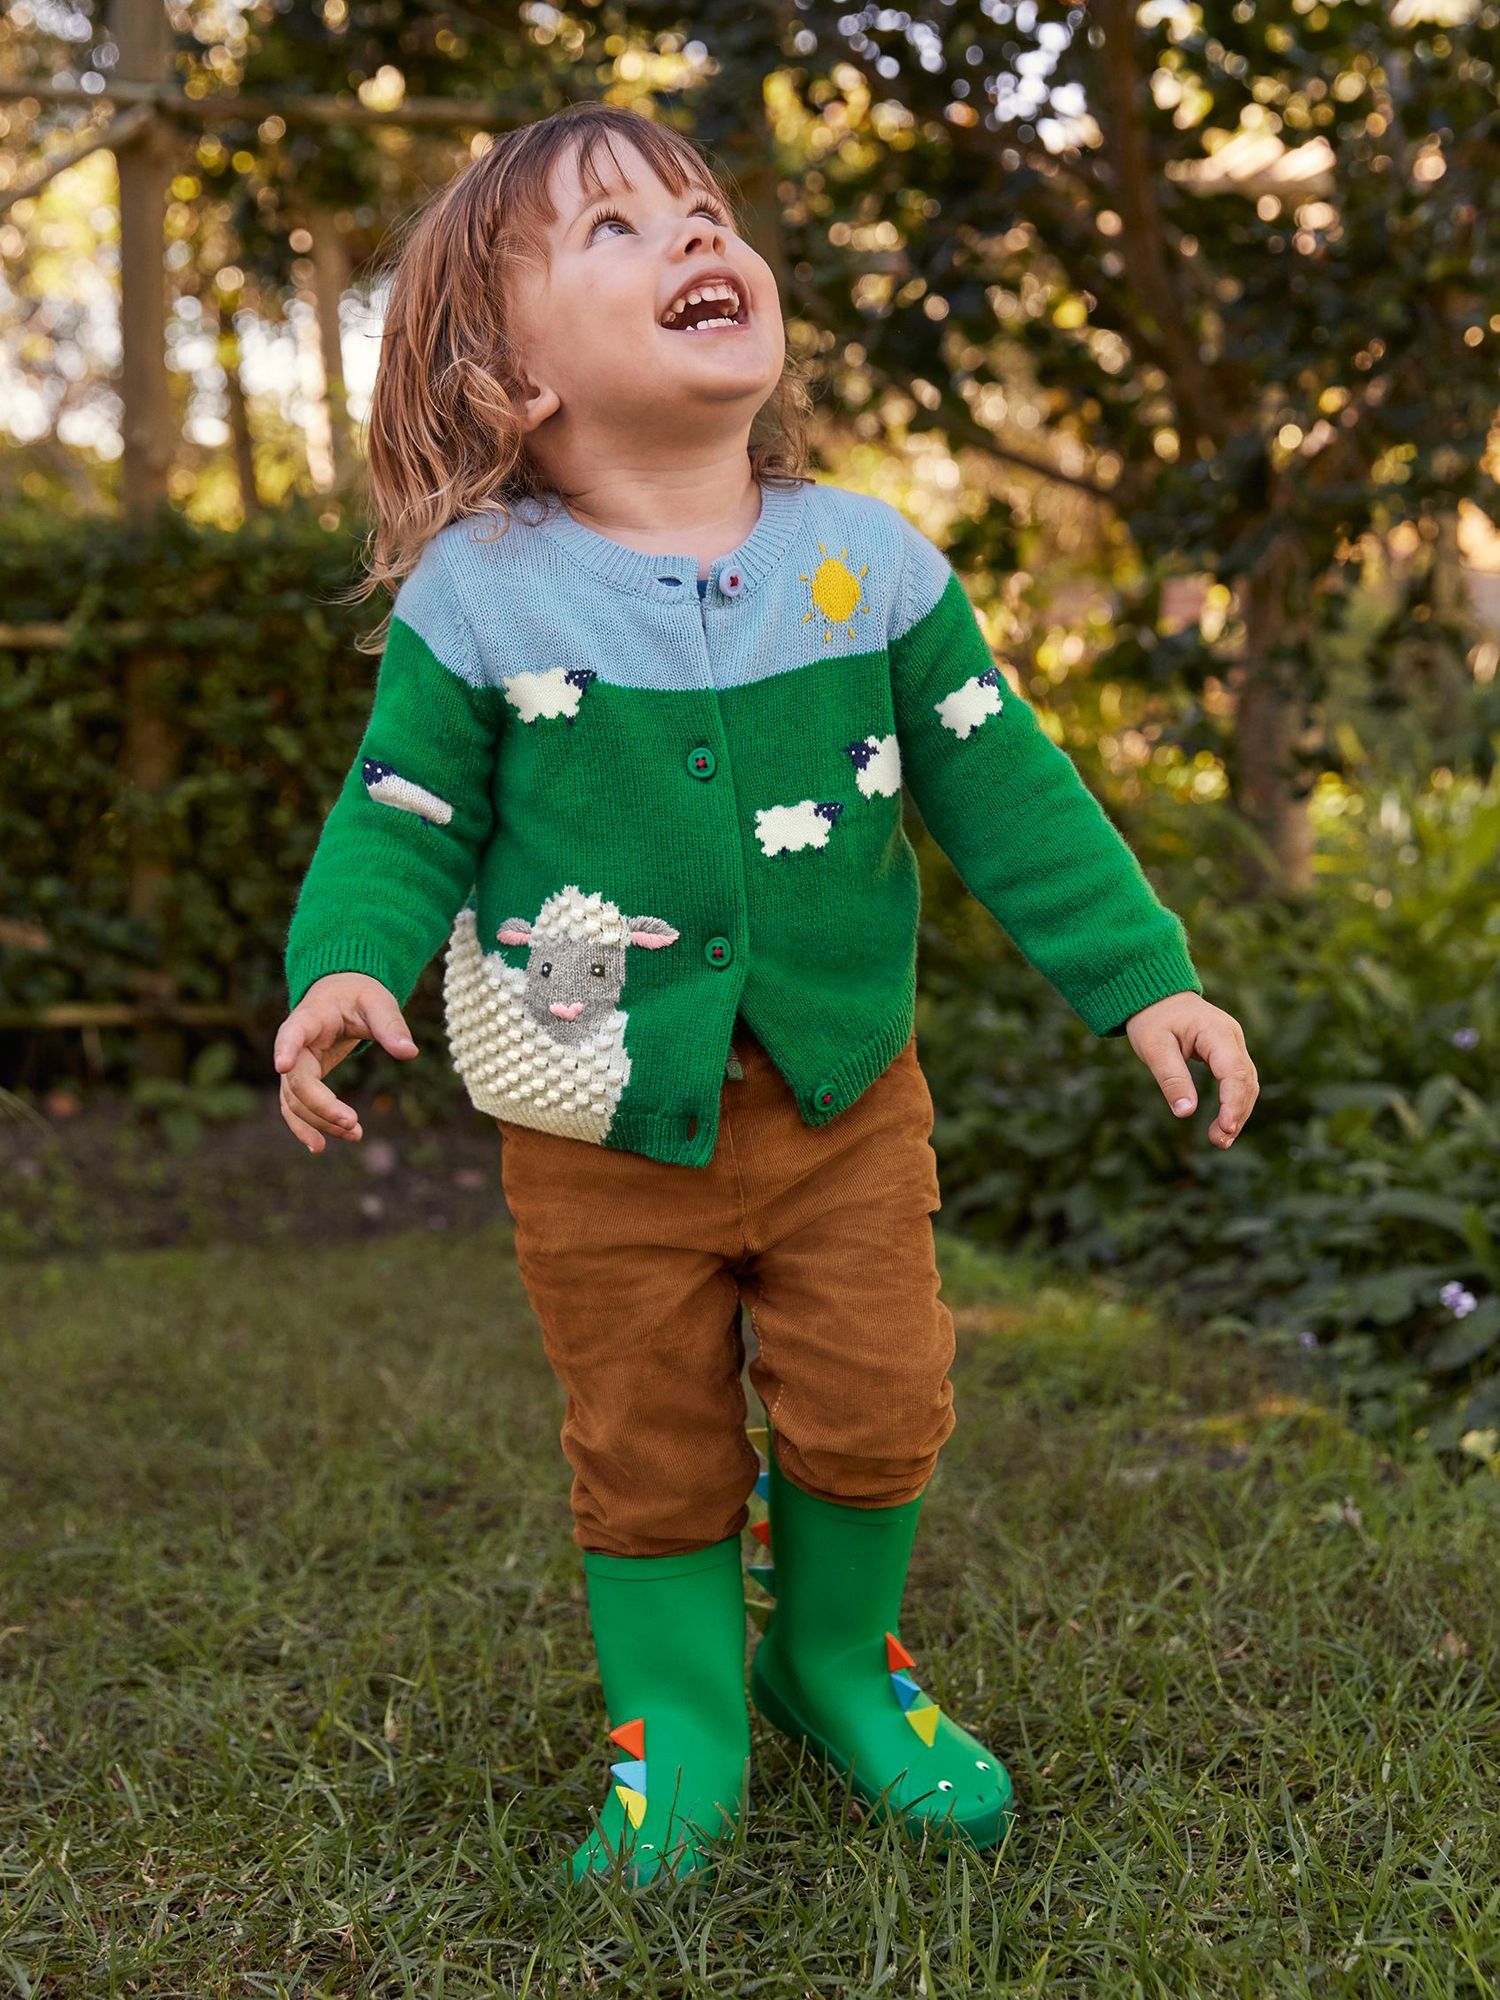 Mini Boden Baby Fun Highland Sheep Cardigan, Green/Multi Multi 3-6 months unisex 38% polyamide, 31% cotton, 24% wool, 6% viscose, 1% alpaca